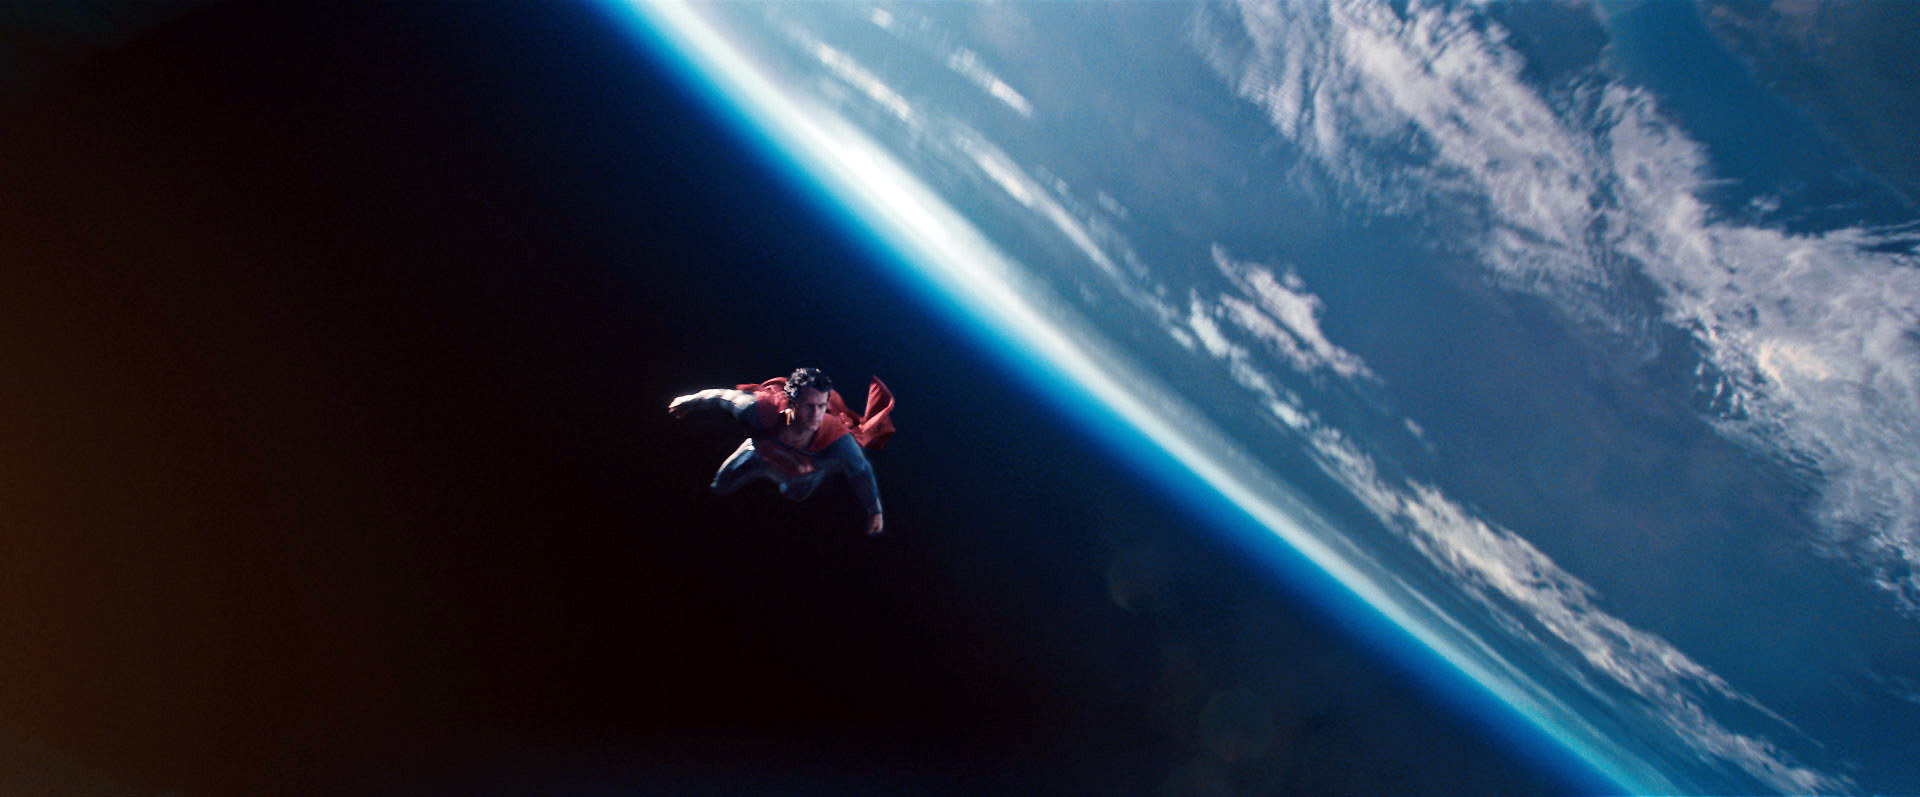 Superman flying in space